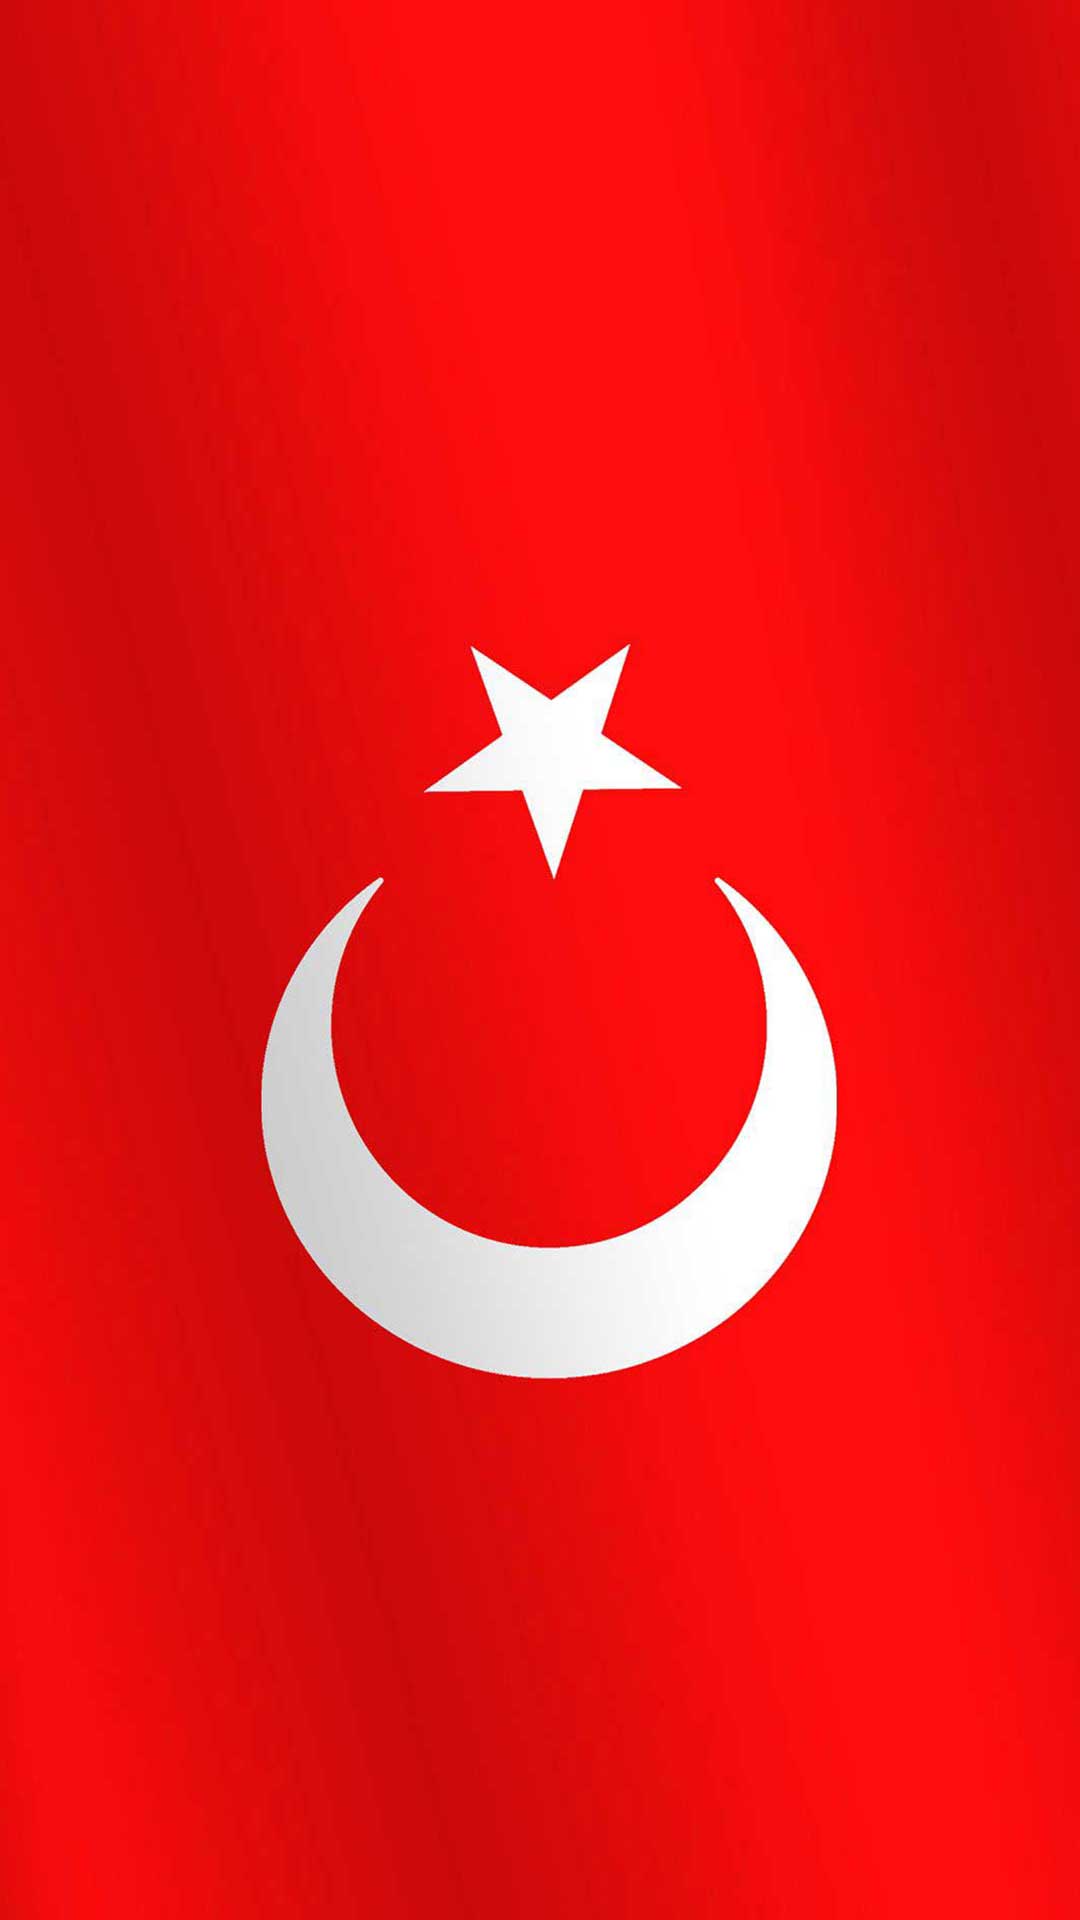 whatsapp turk bayragi arkaplan resimleri 7